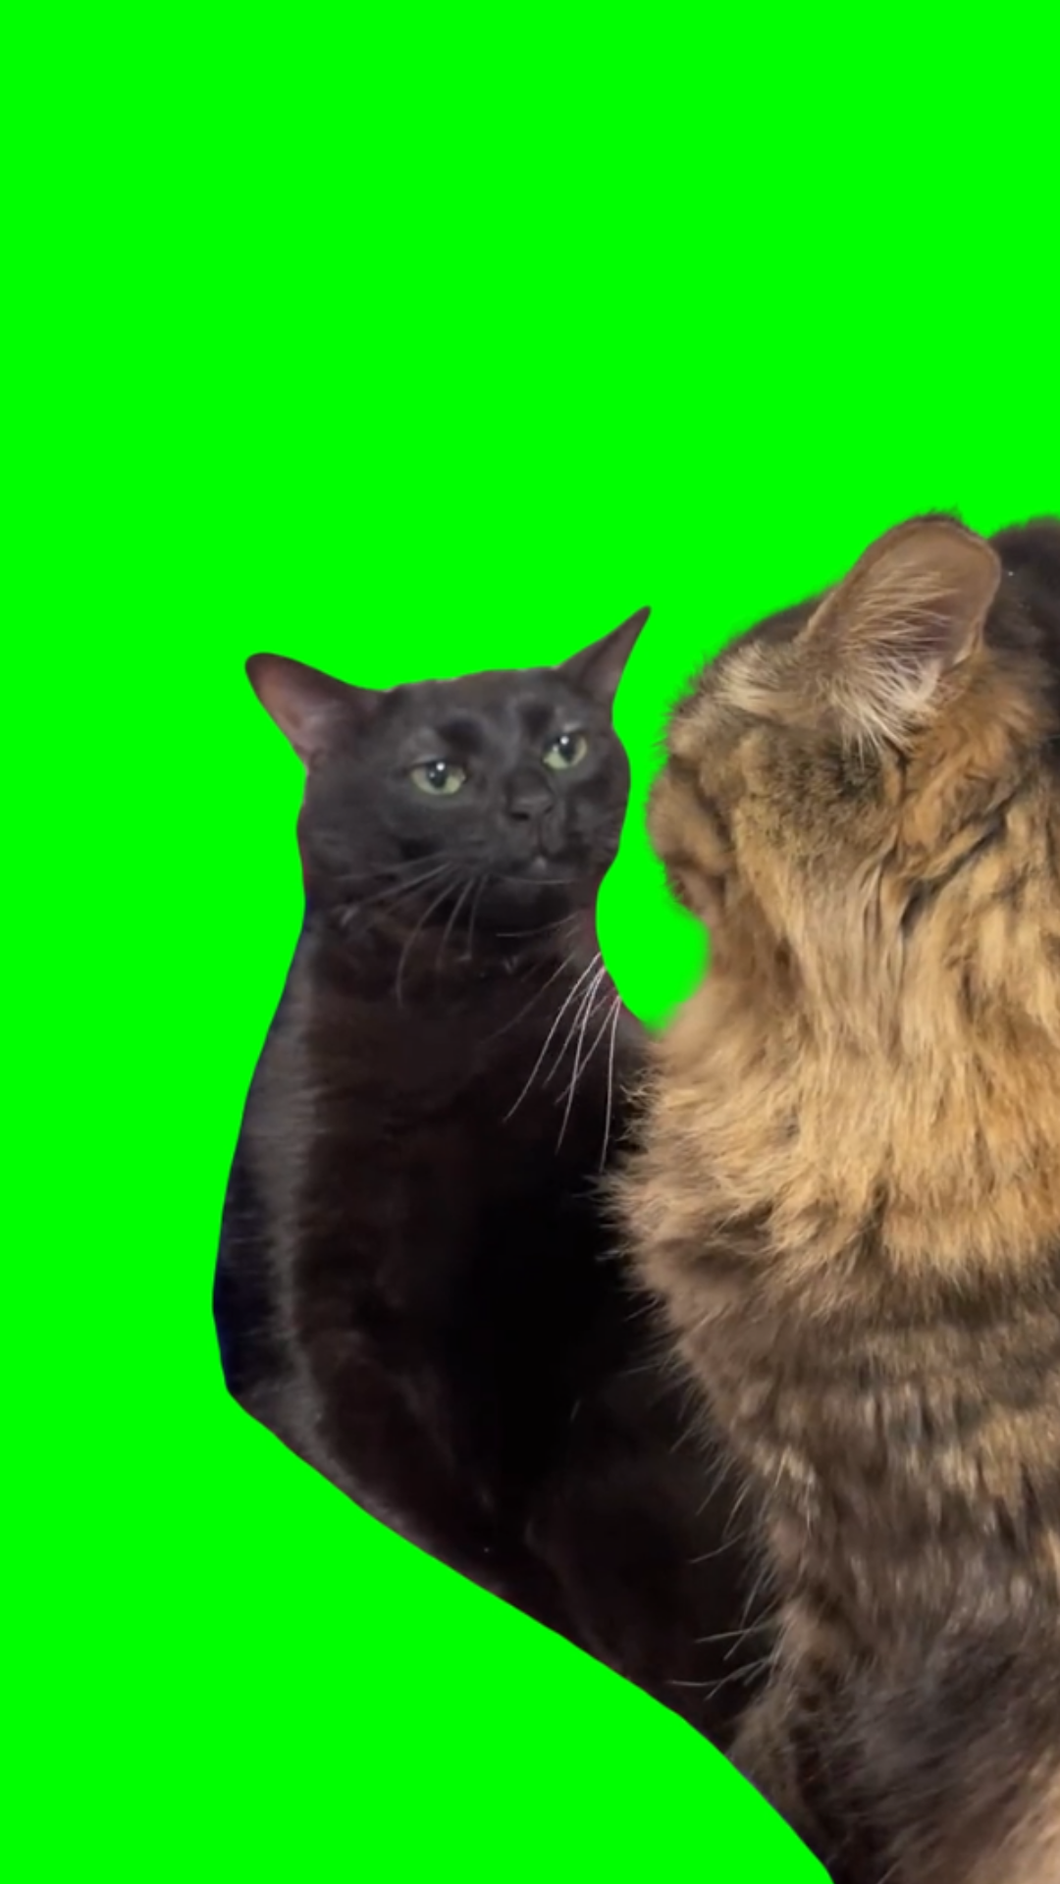 Black Cat Zoning Out Meme (Green Screen)